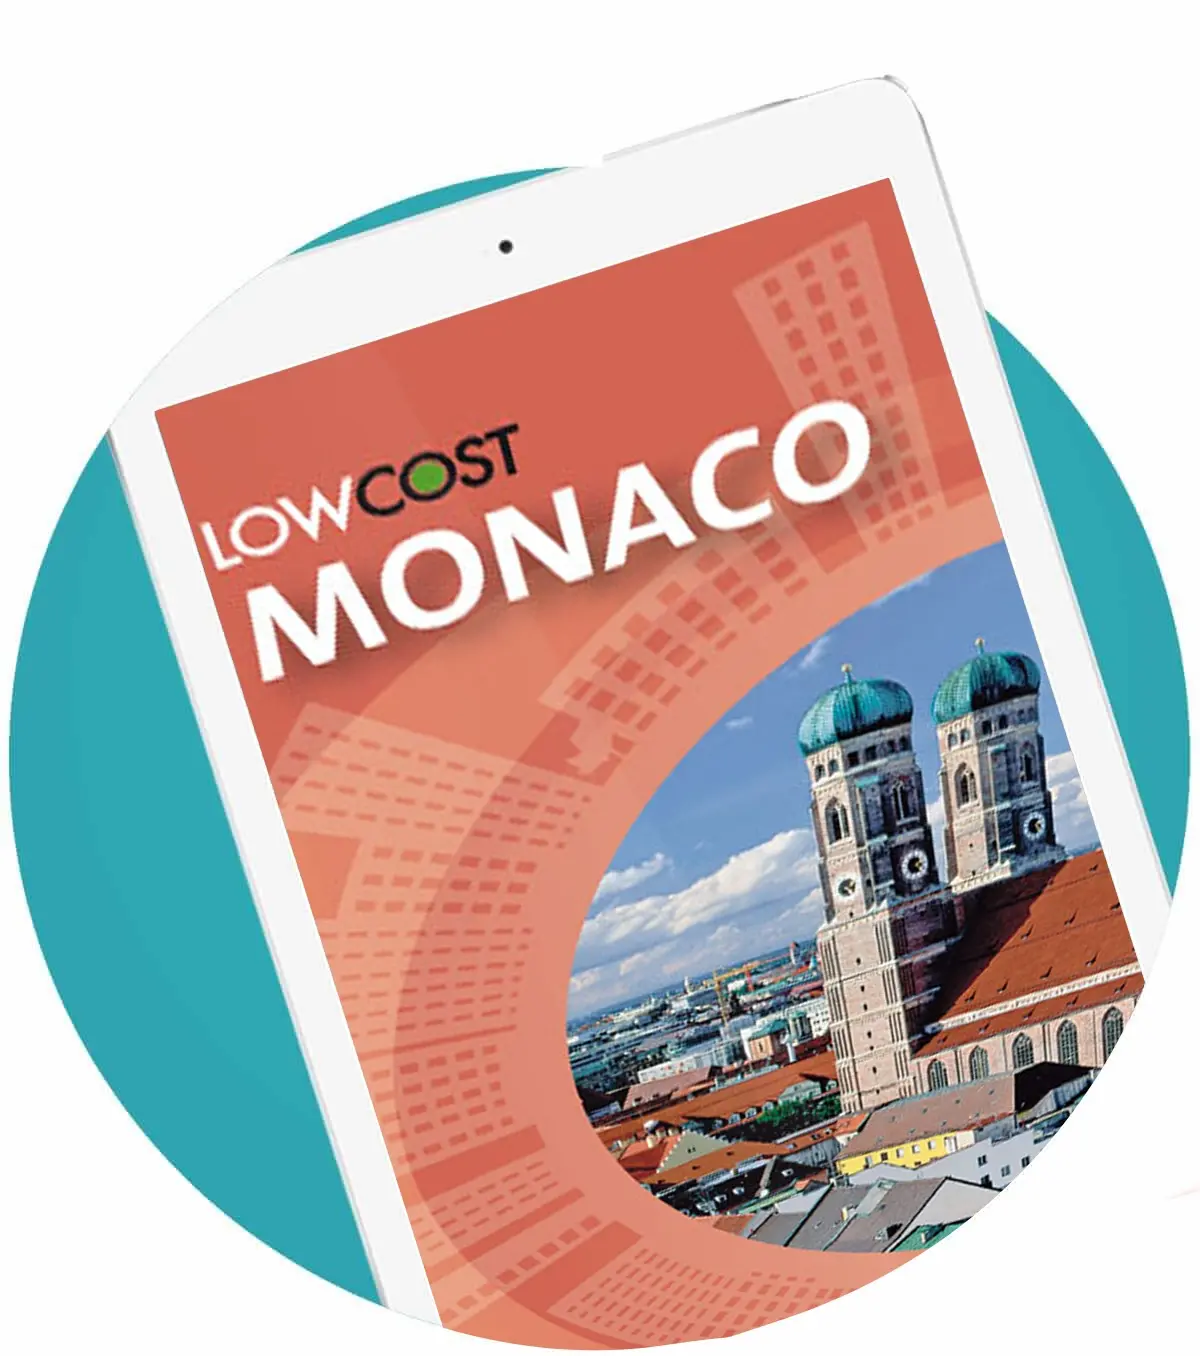 Ebook Omaggio Monaco